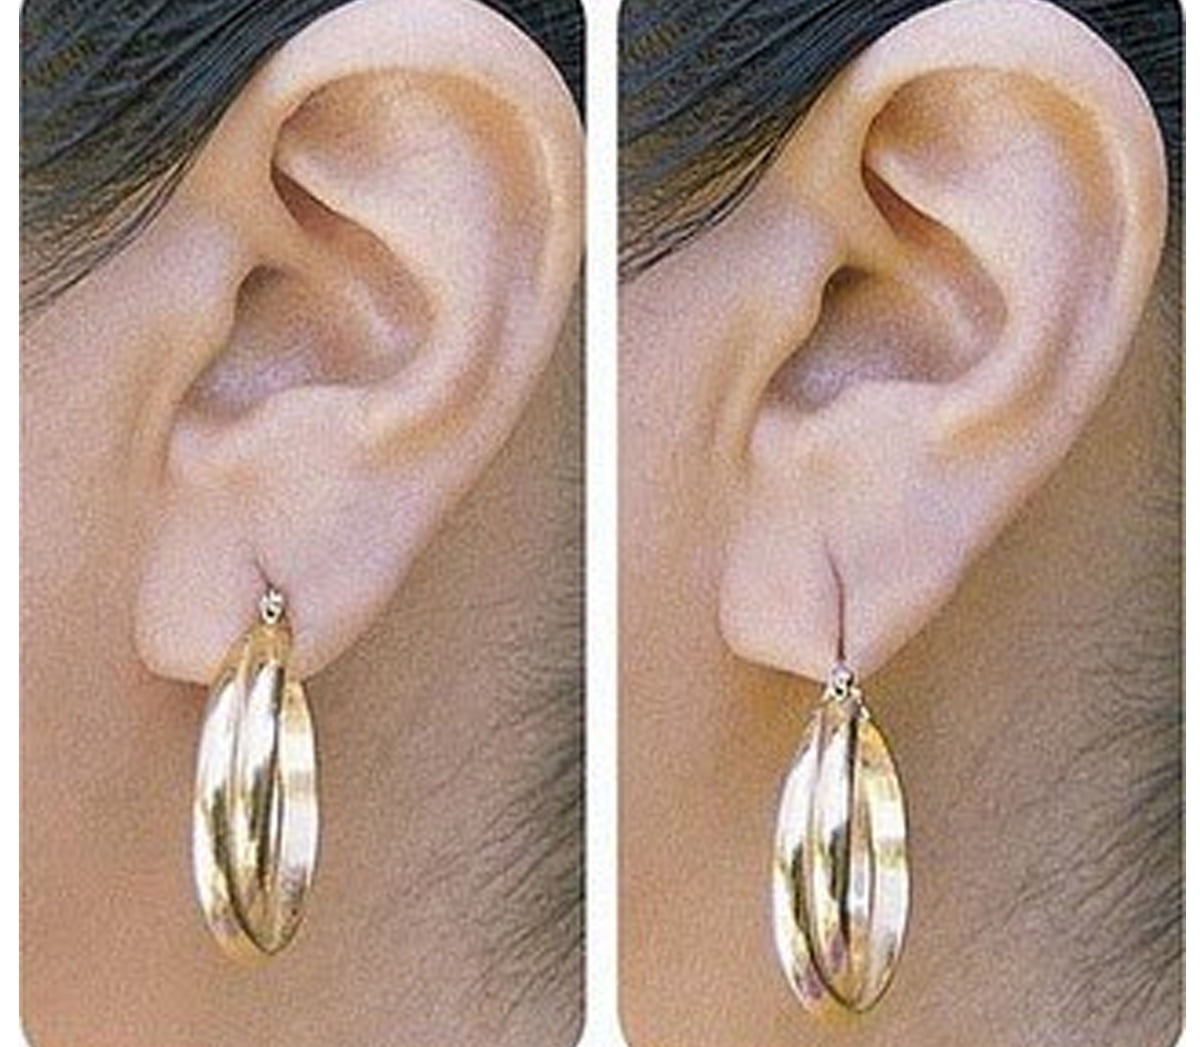 Lobe Wonder Reusable Ear Lobe Support Price in India - Buy Lobe